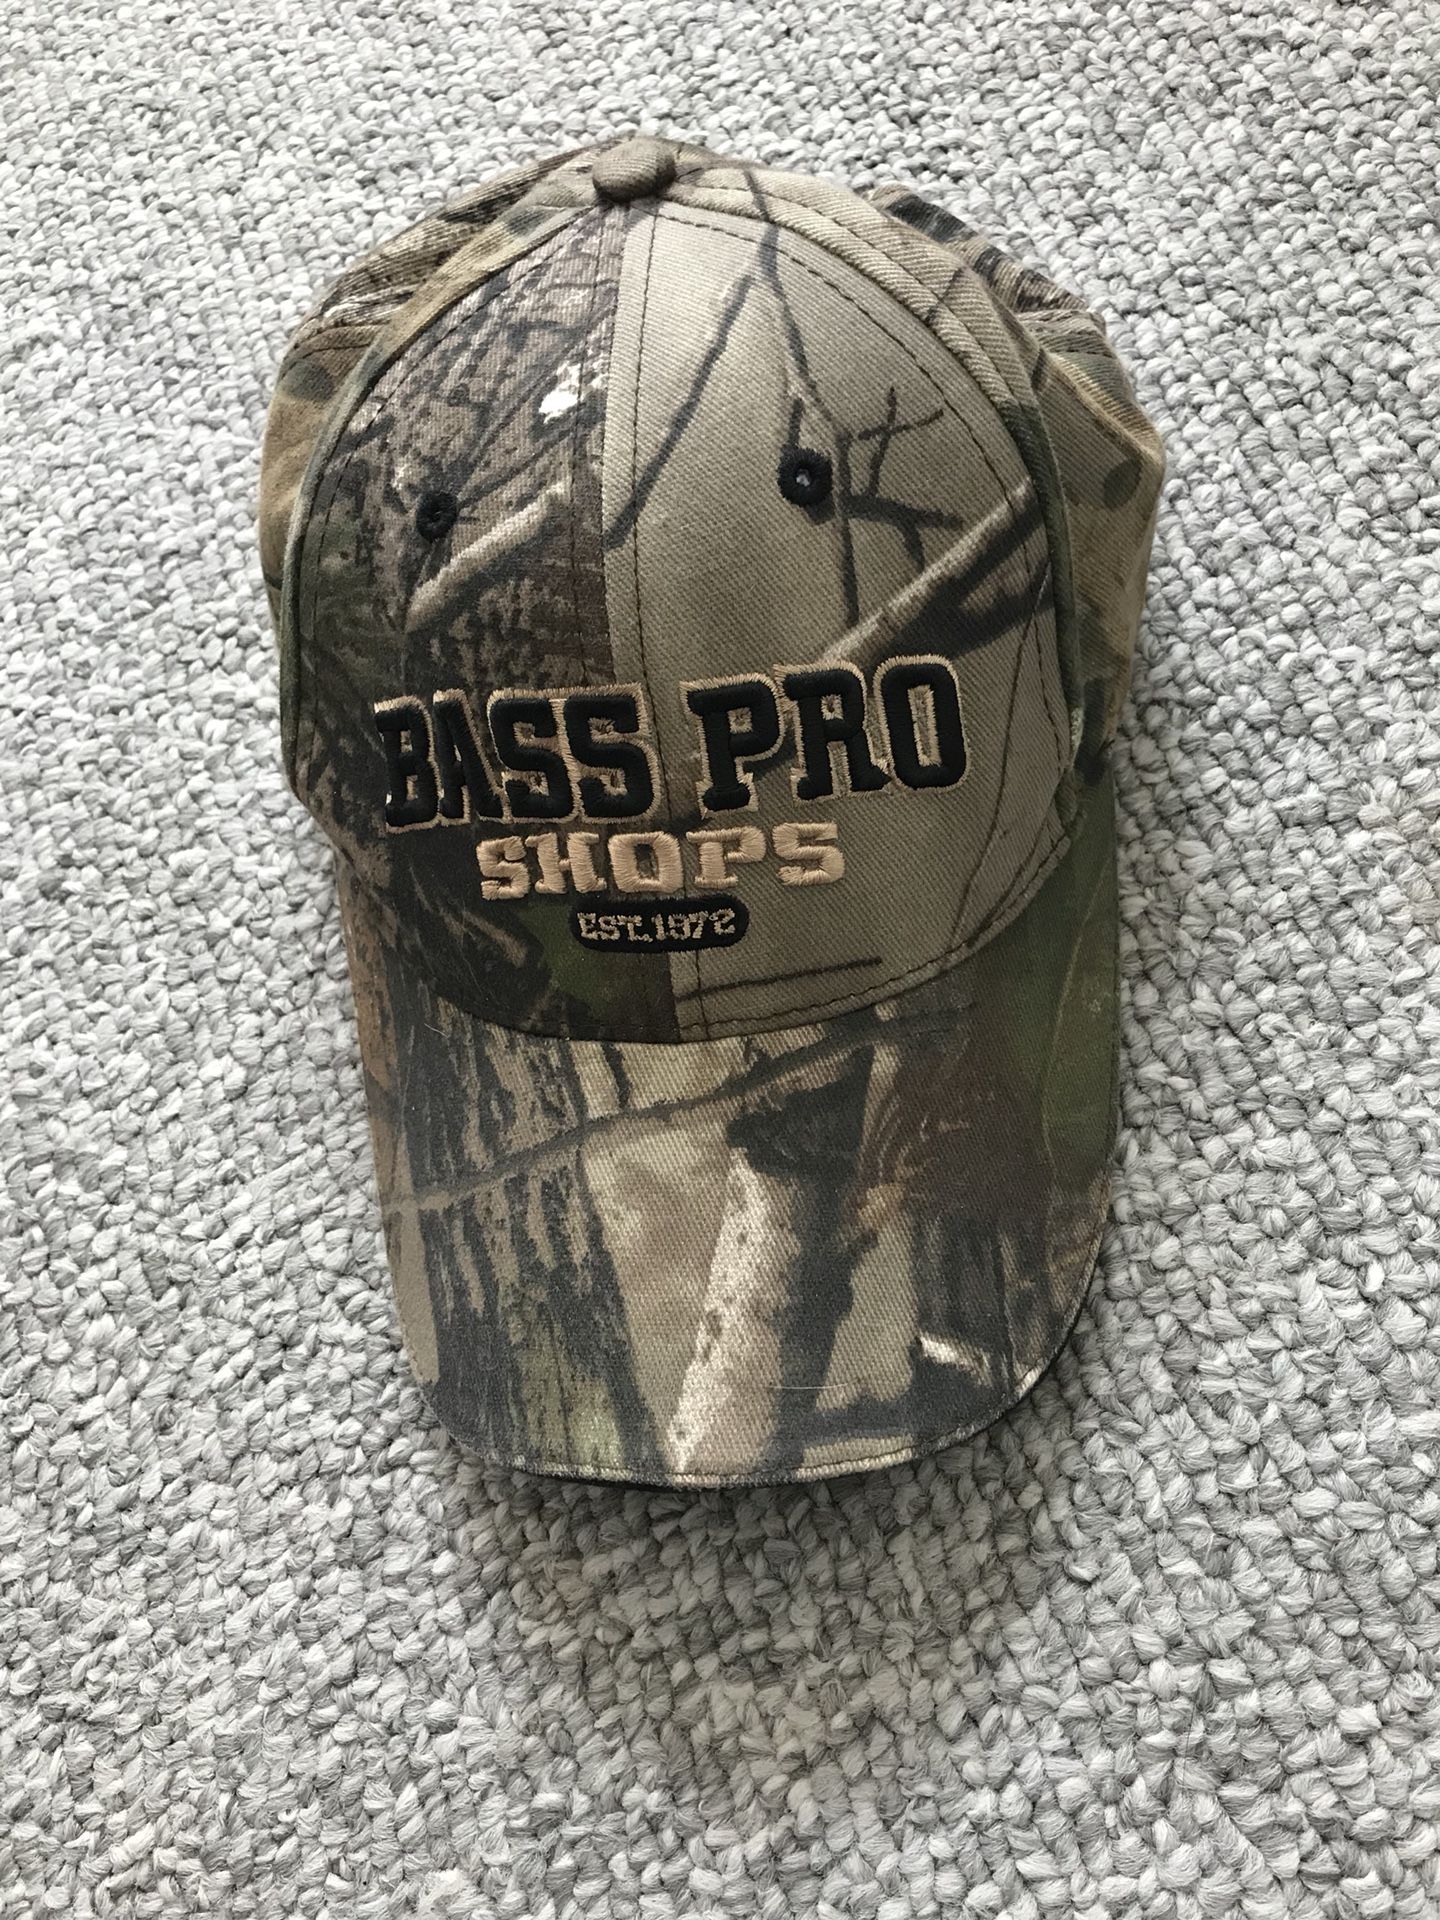 Bass Pro hat